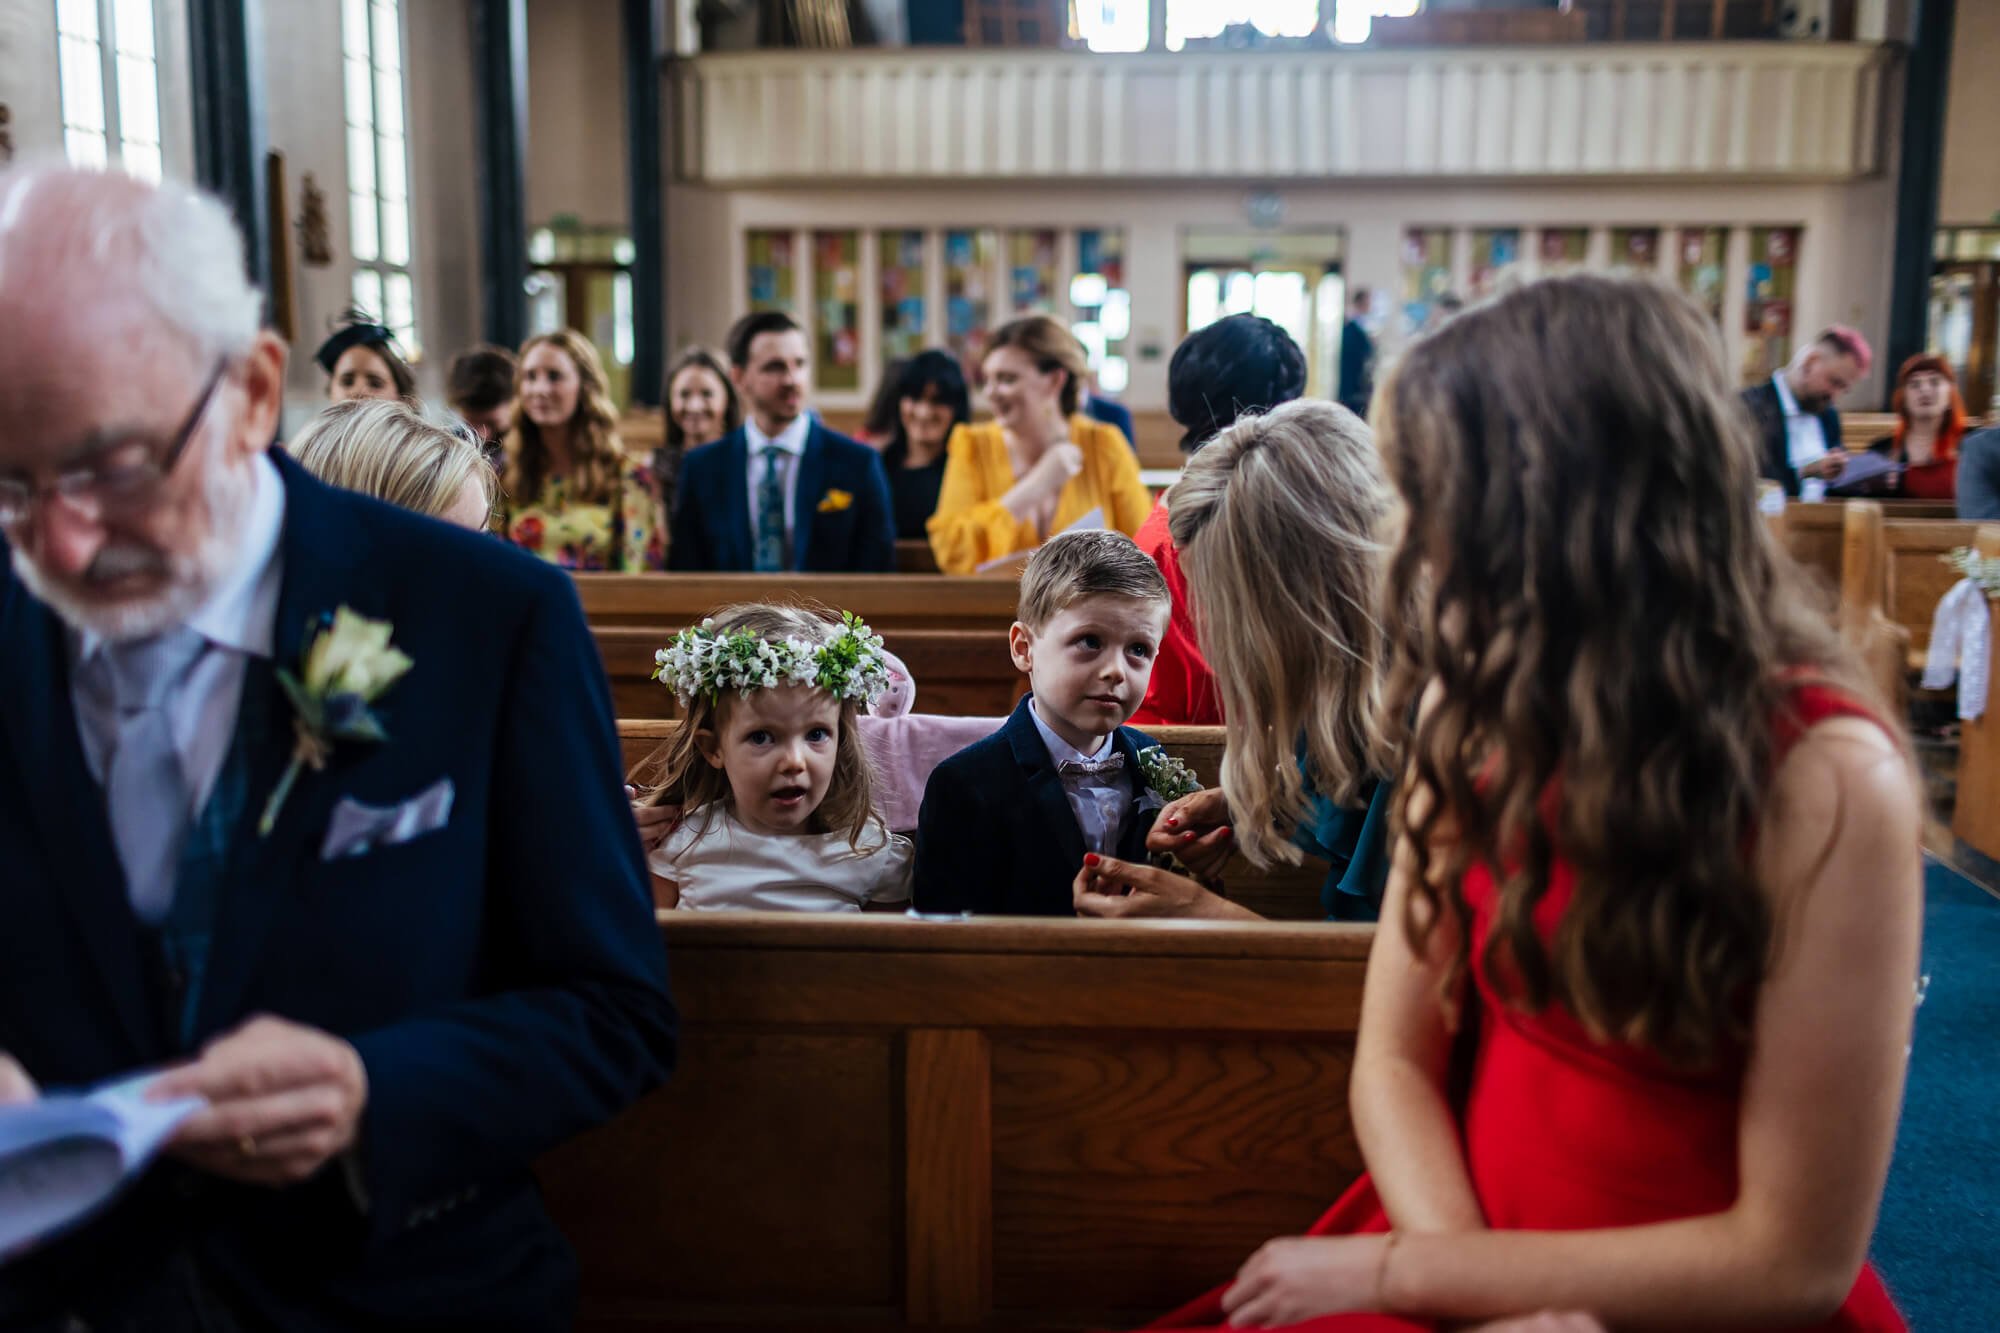 Young children at a church wedding